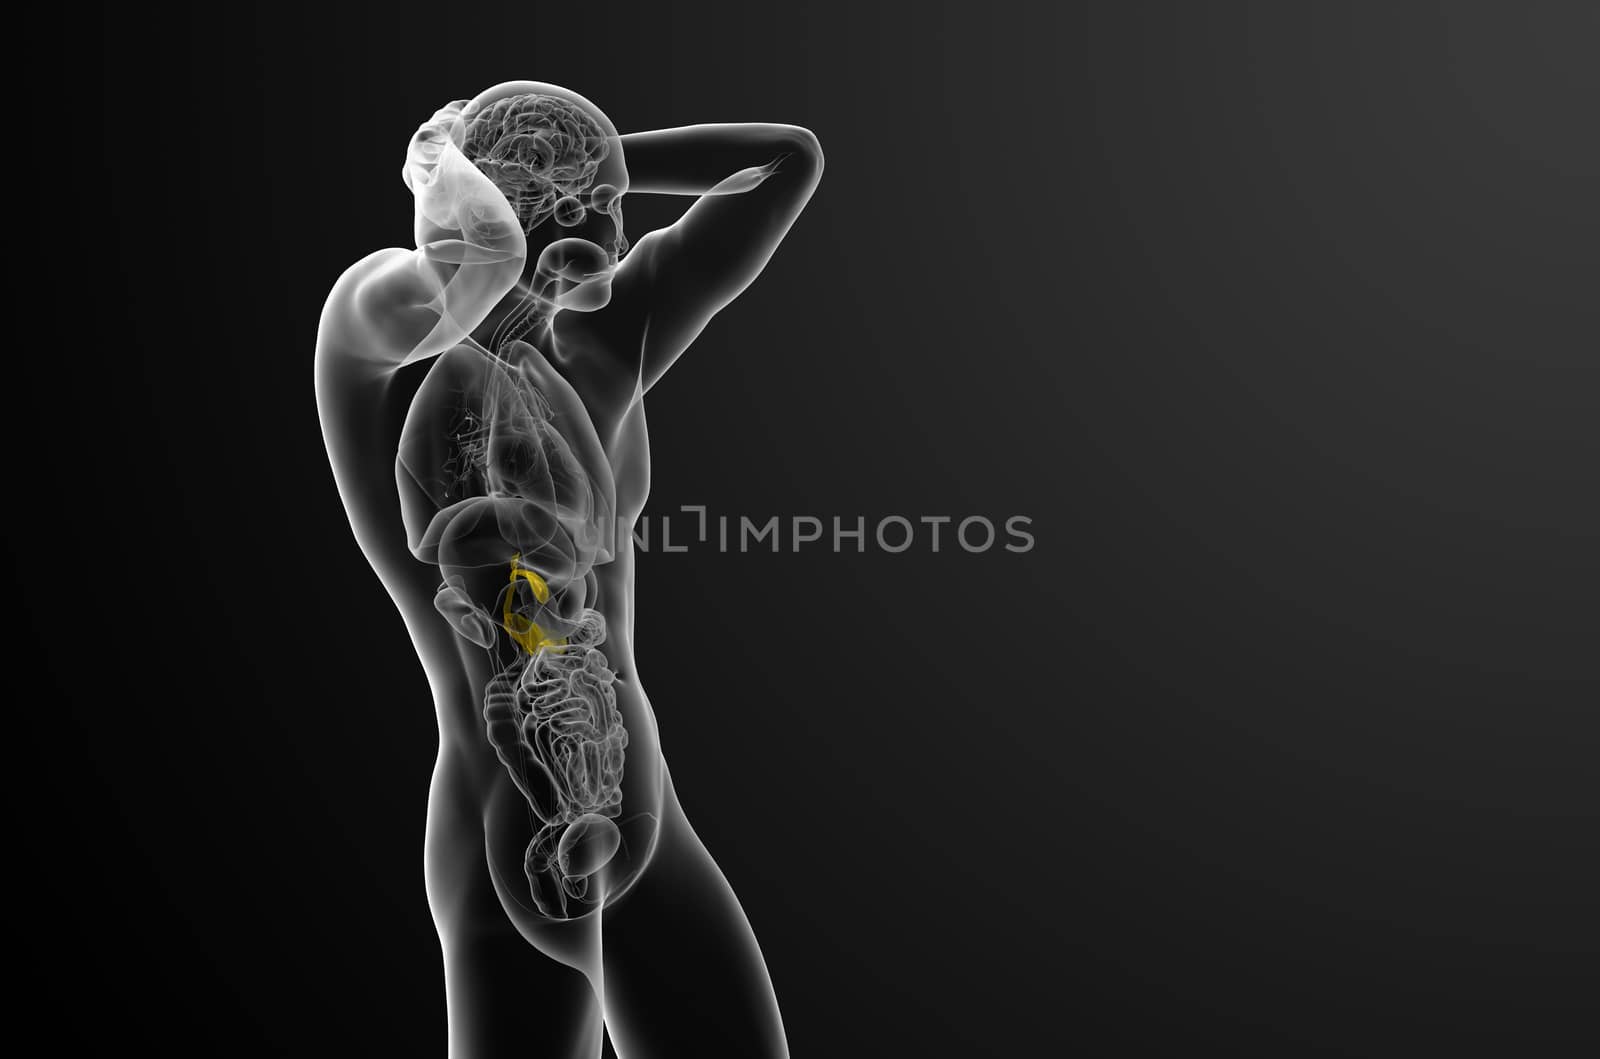 3d render medical illustration of the gallblader and pancrease - side view